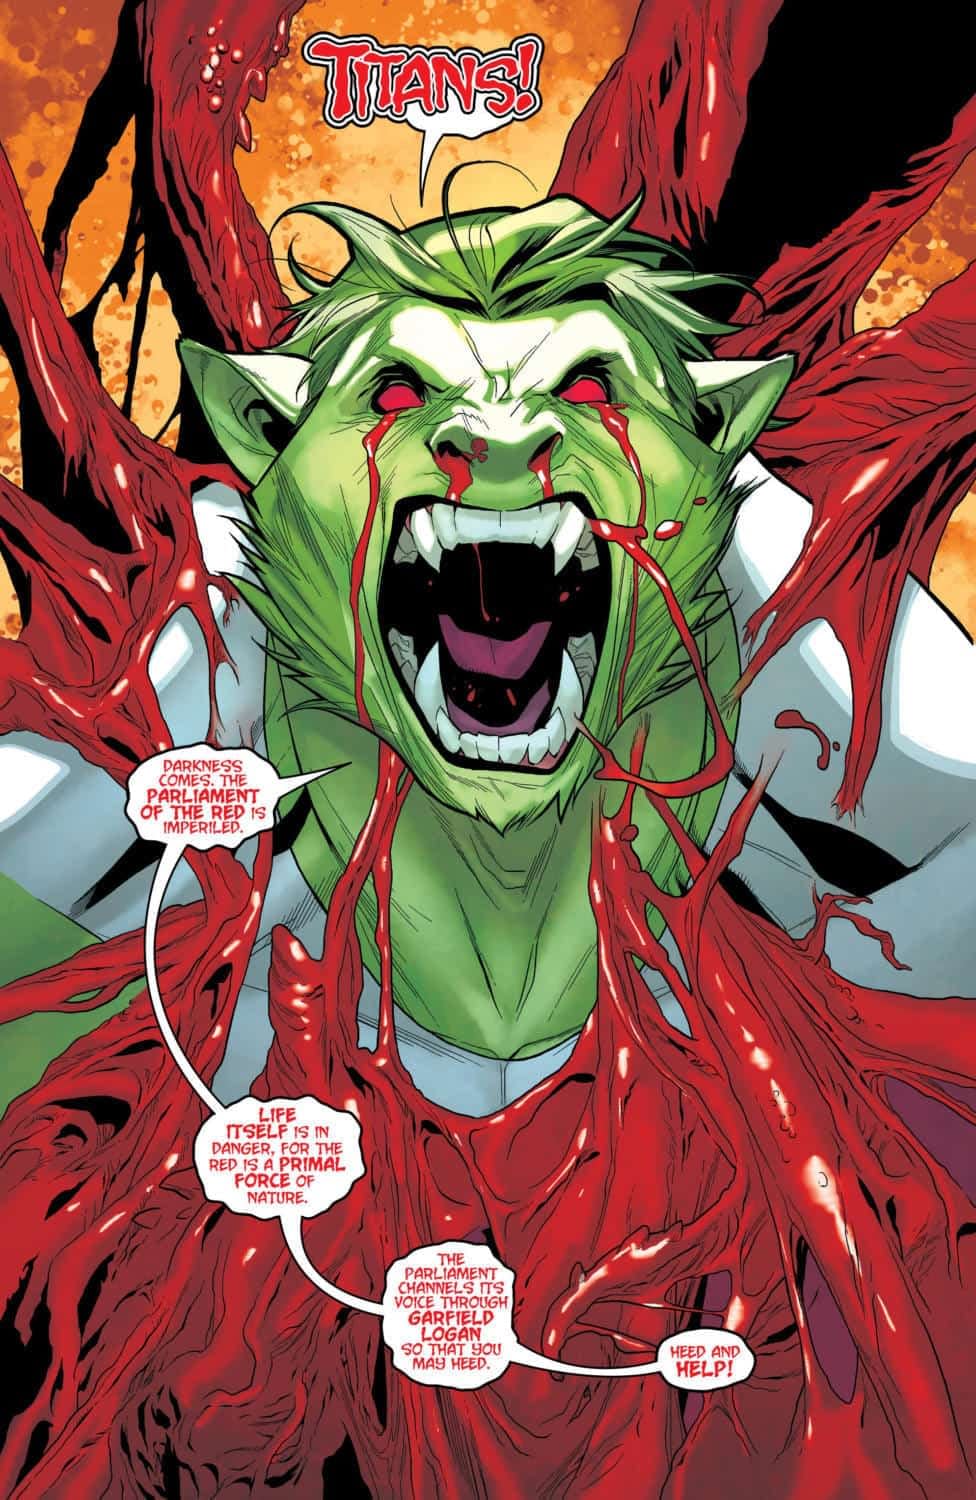 Asylum-Seeking Mother Blood Takes on ICE in Next Week's Titans #32